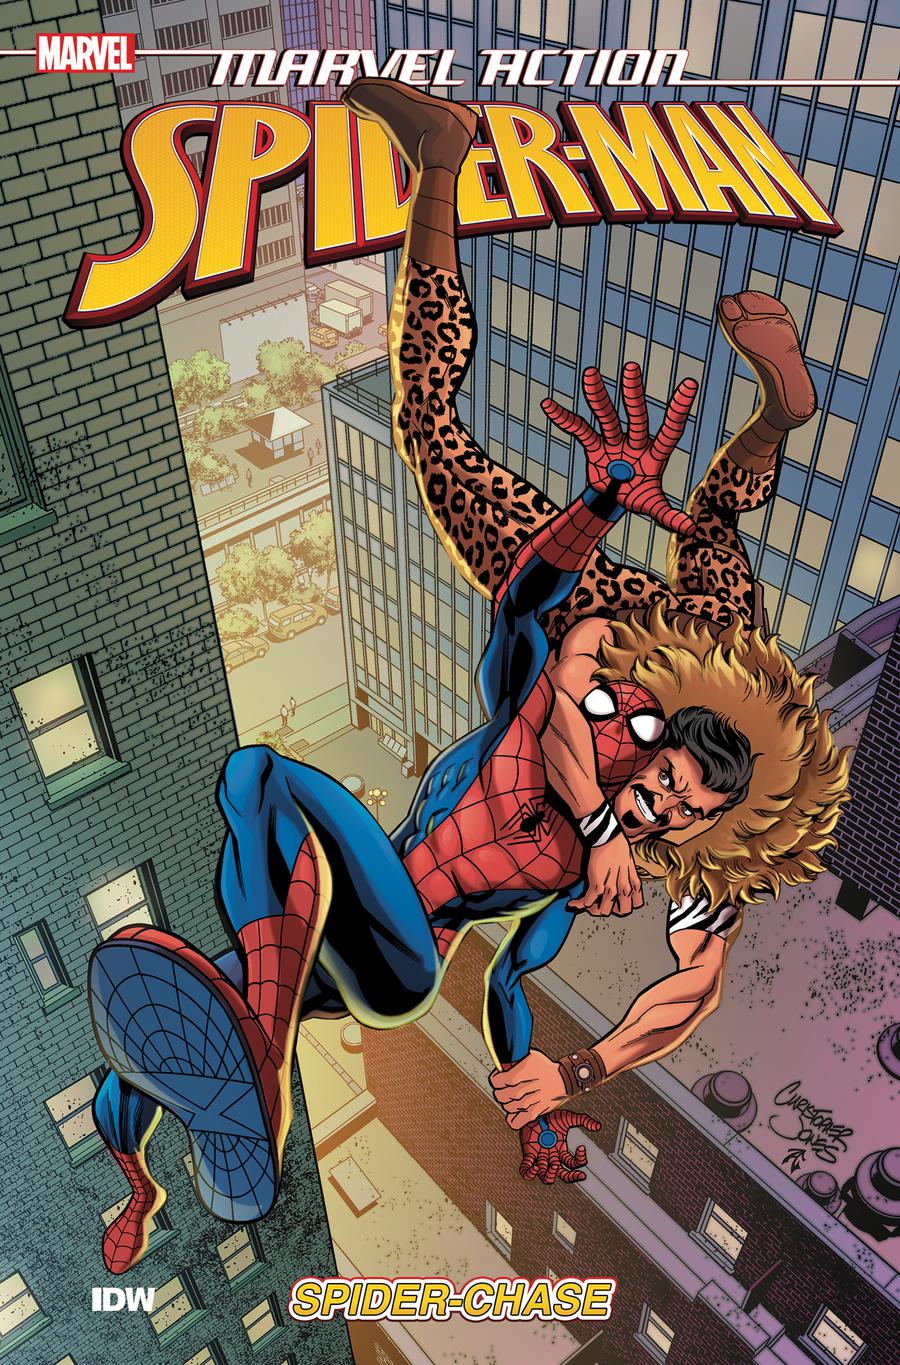 Marvel Action Spider-Man Book 2 Spider-Chase TP